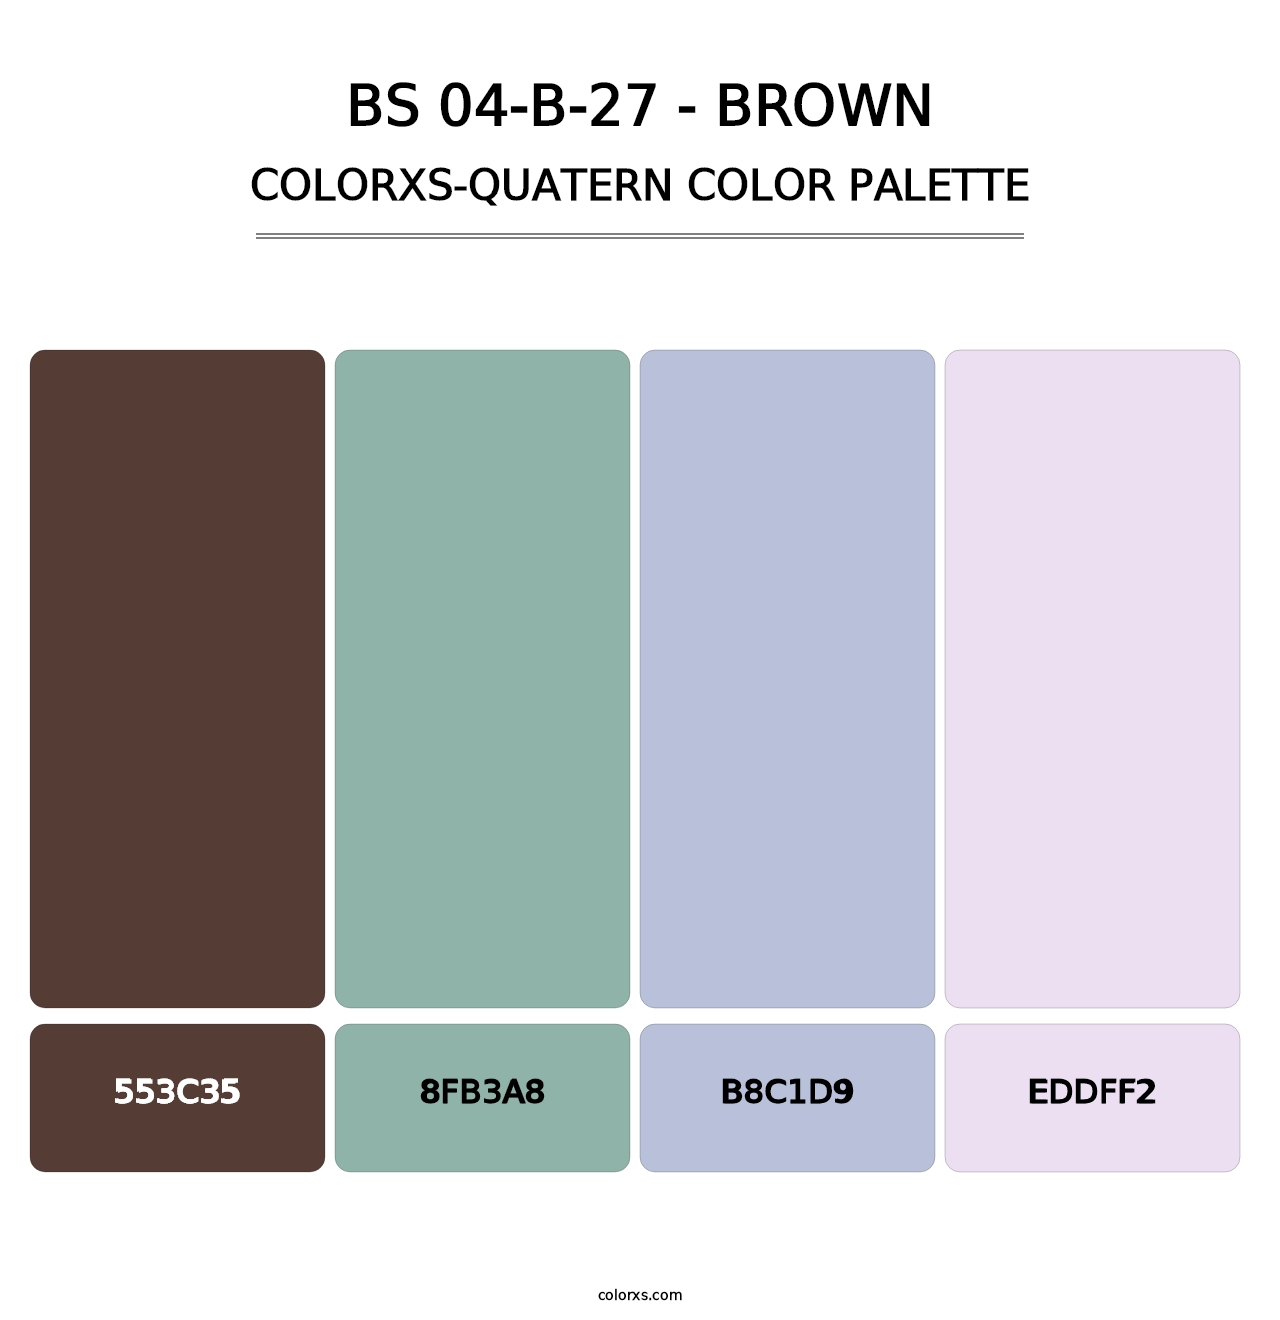 BS 04-B-27 - Brown - Colorxs Quatern Palette